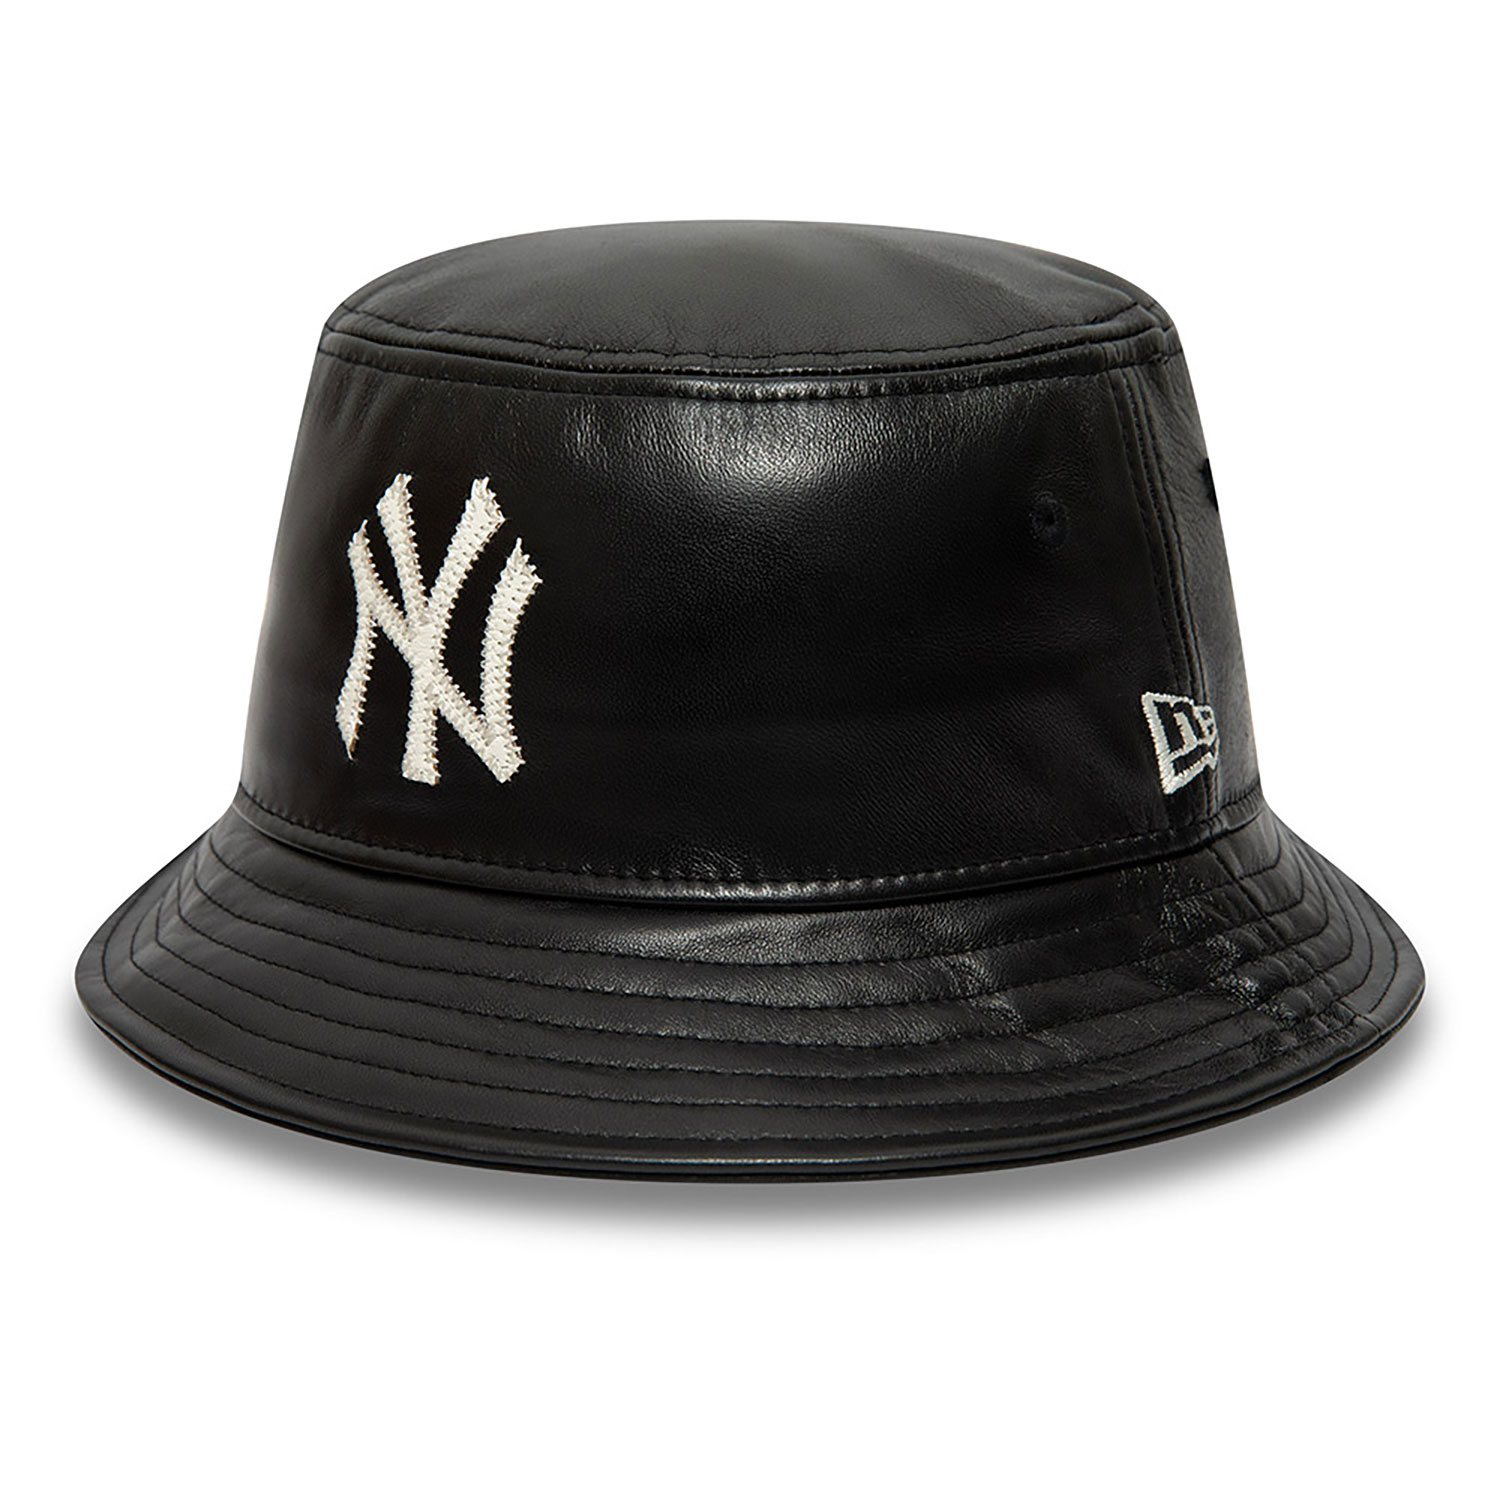 Leather Caps & Hats | Leather Bucket Hats | New Era Cap BG